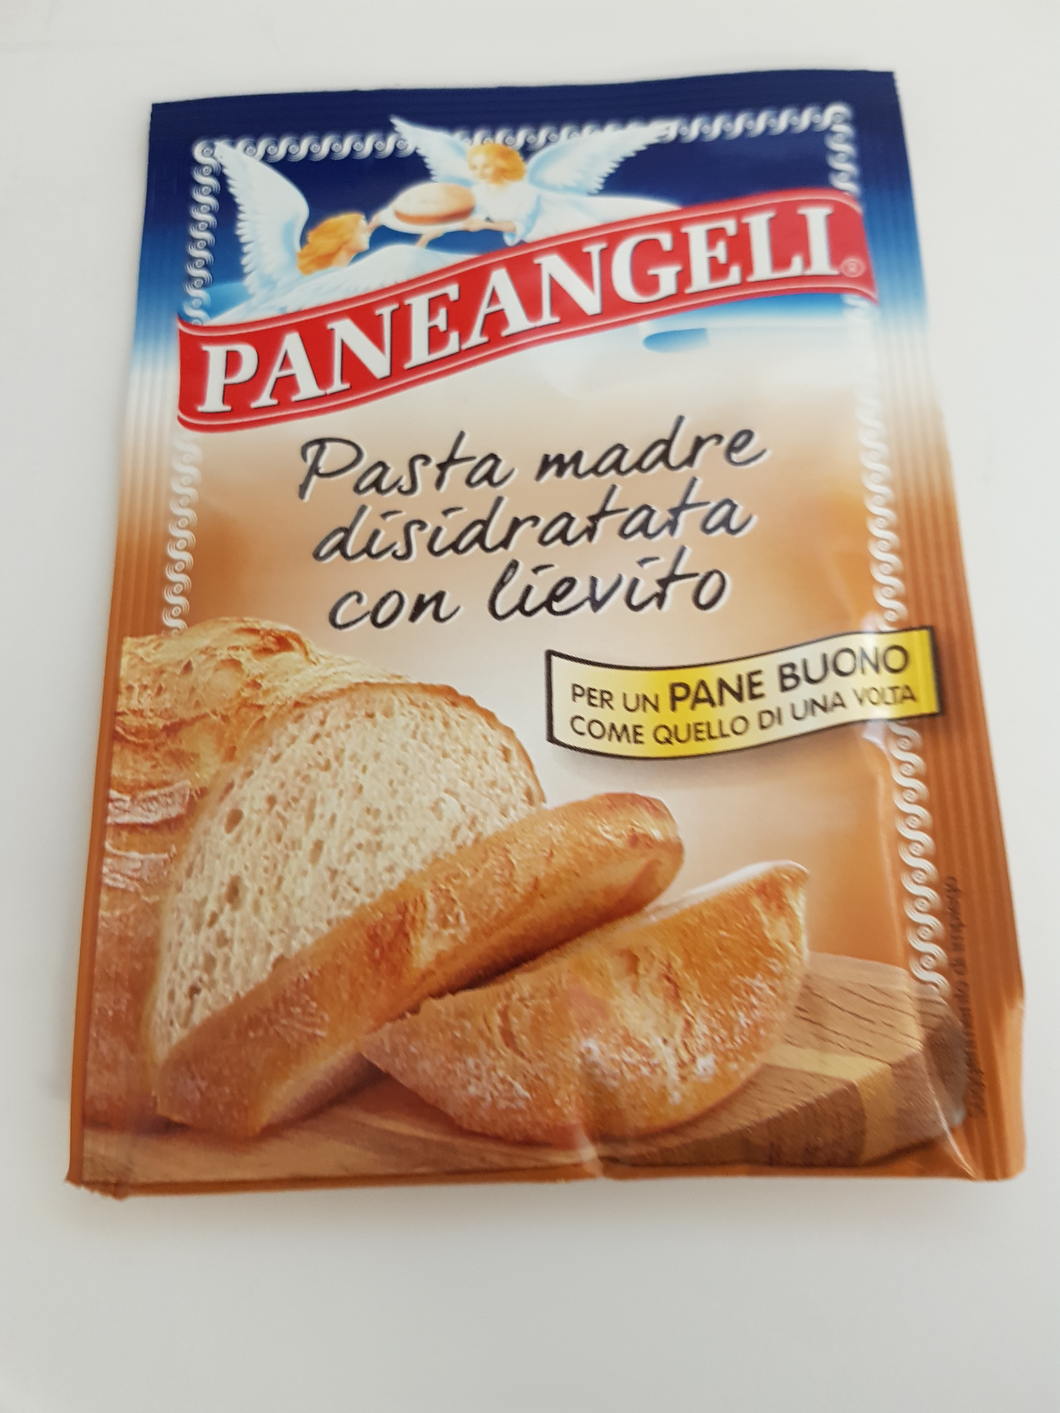 Paneangeli - Pasta madre lievito (Mother Yeast)